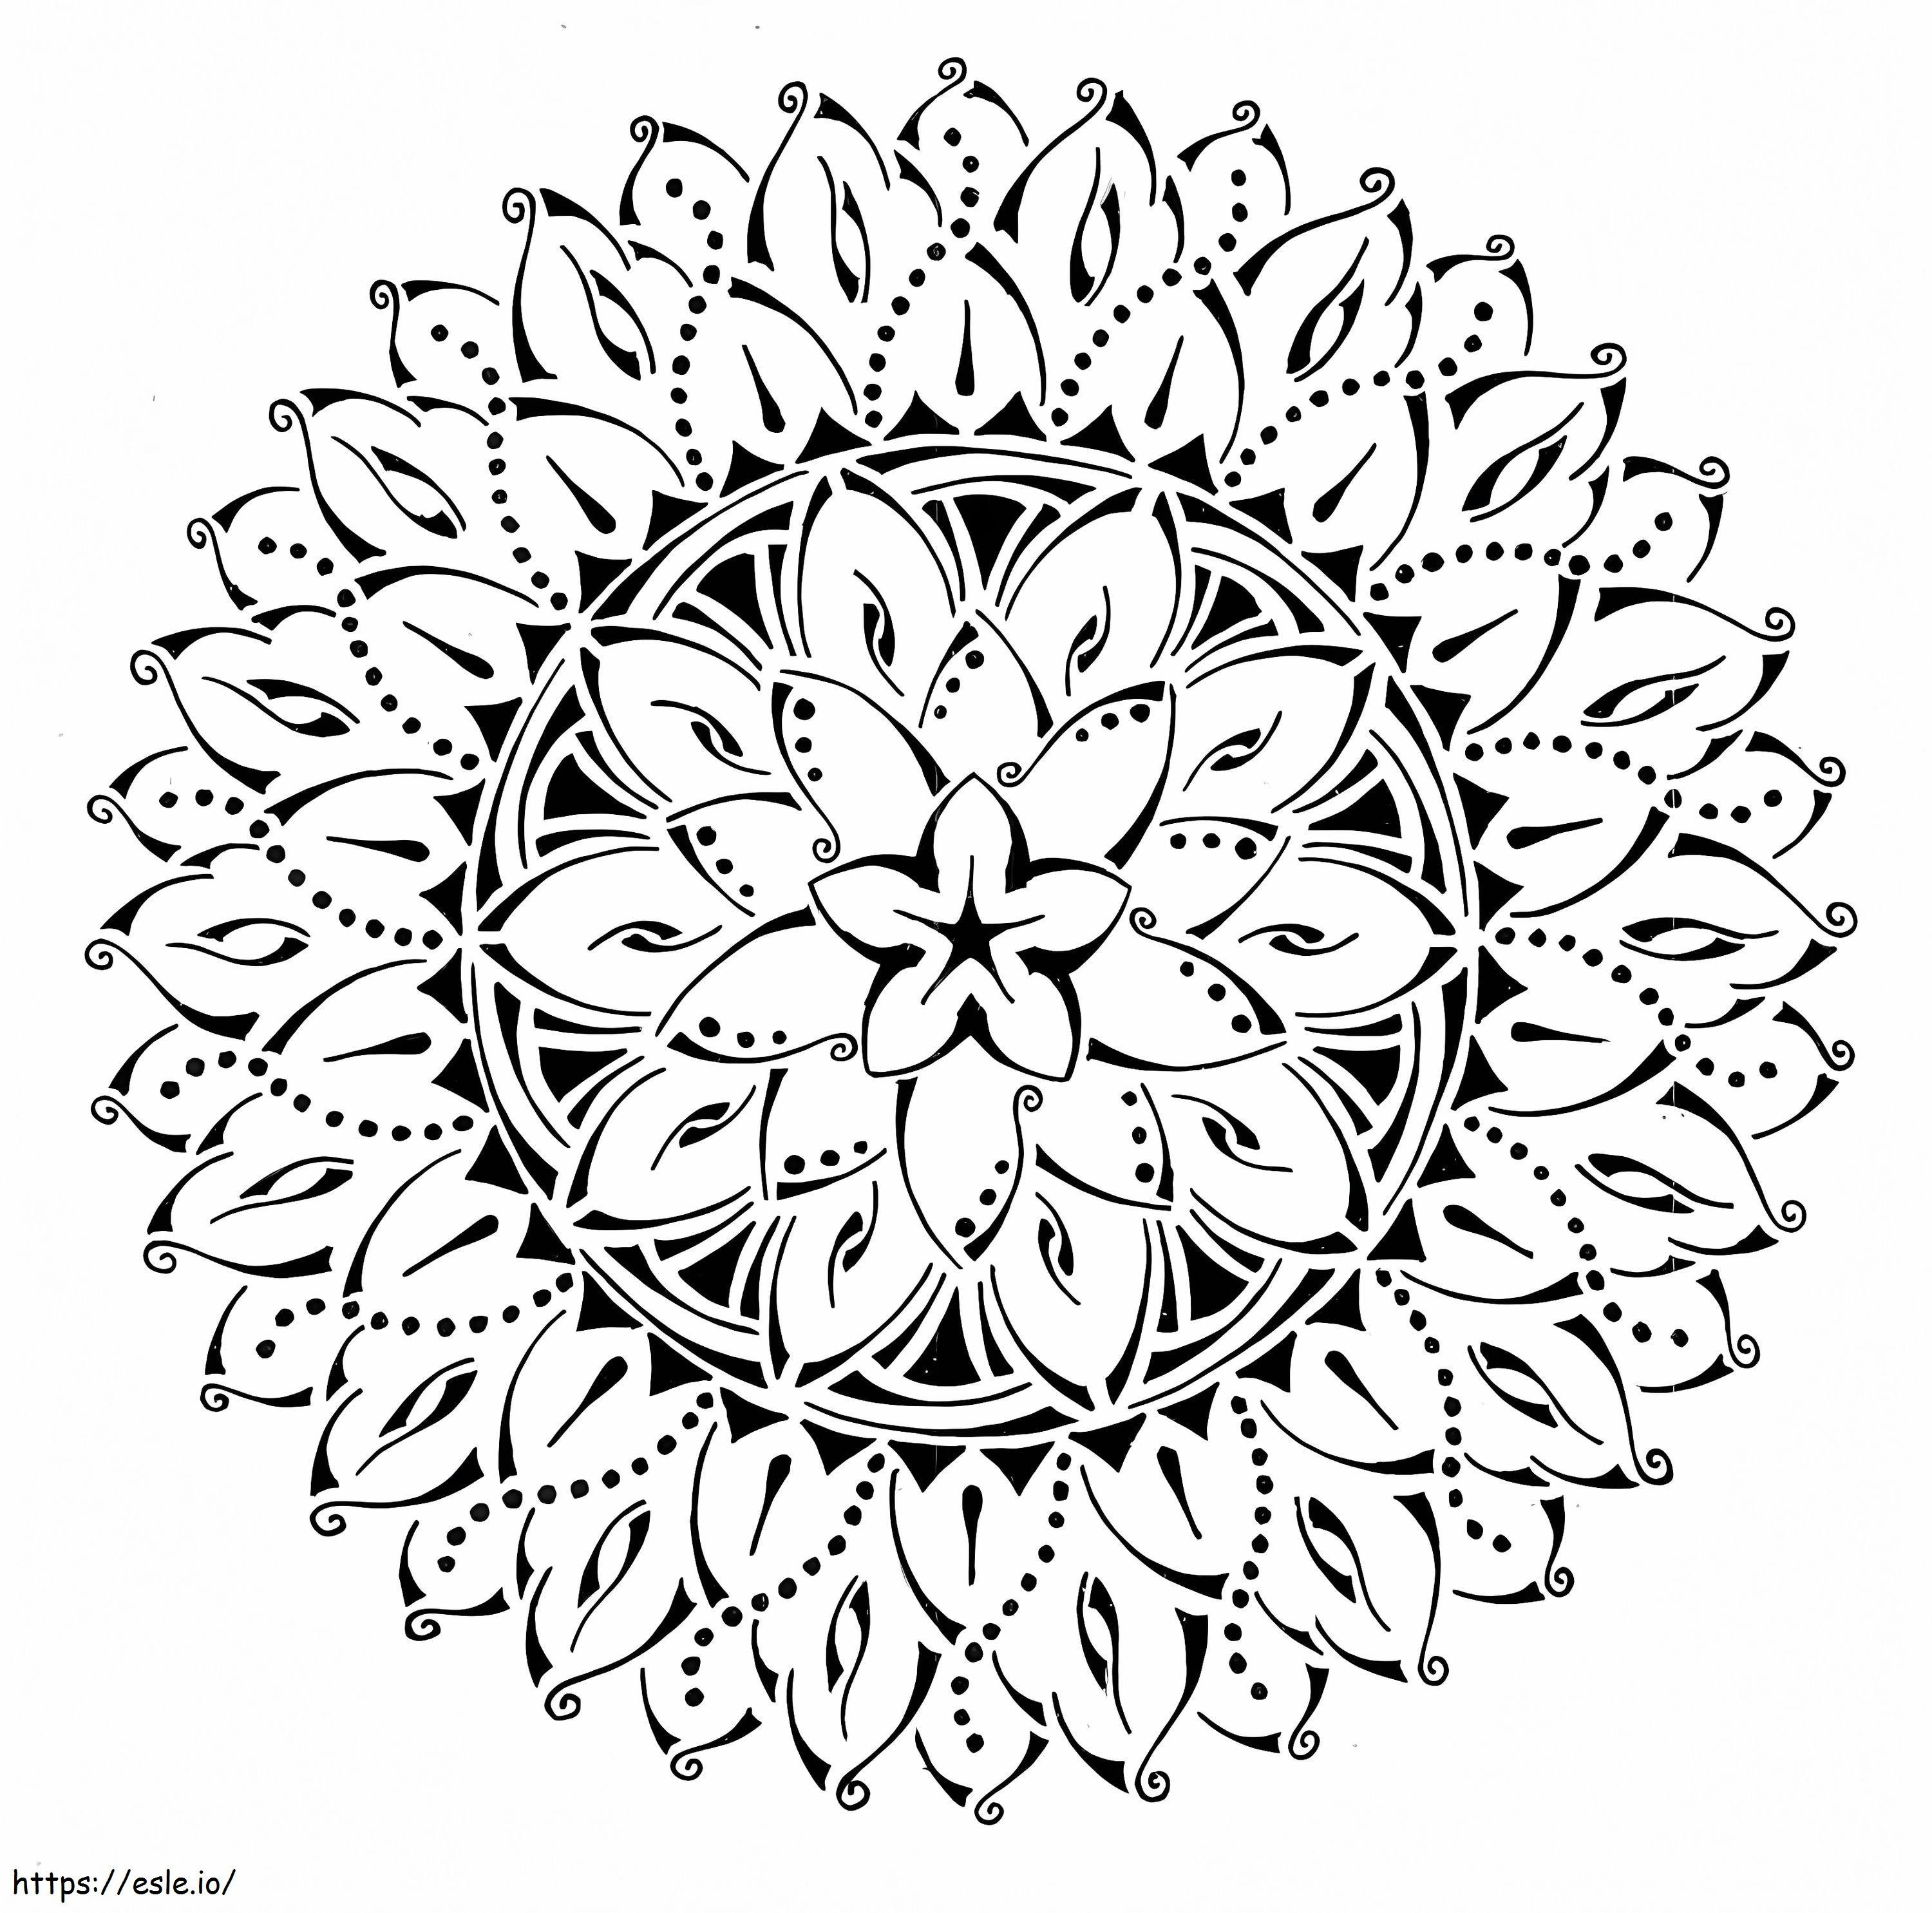 Flower Tribal Mandala coloring page